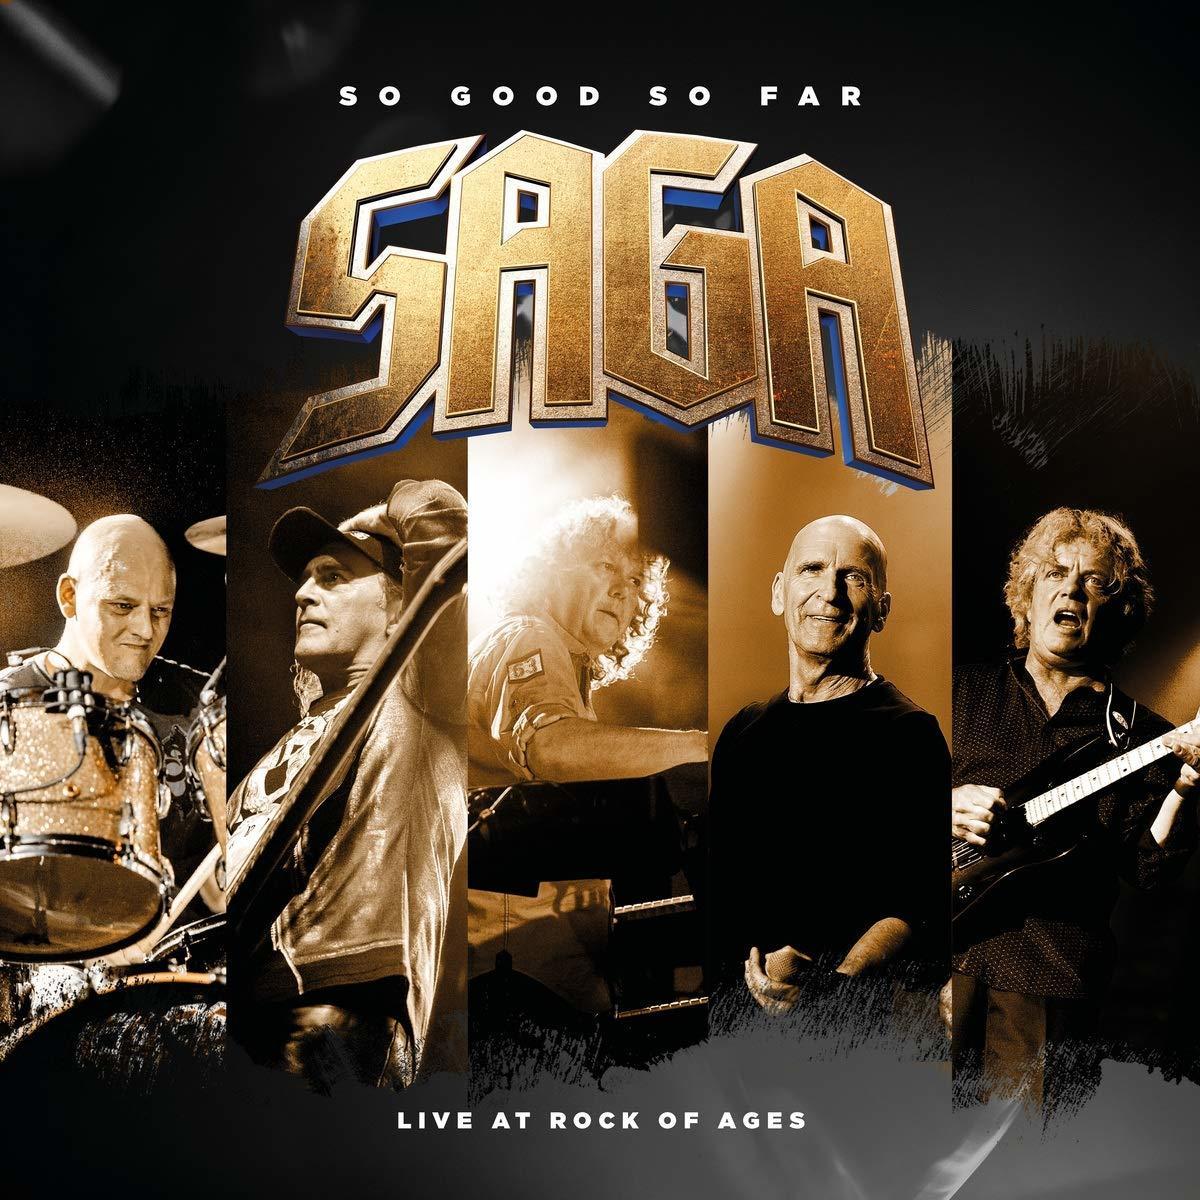 Of Good - Video) So At Live - (CD So Ages Far - Saga Rock DVD +